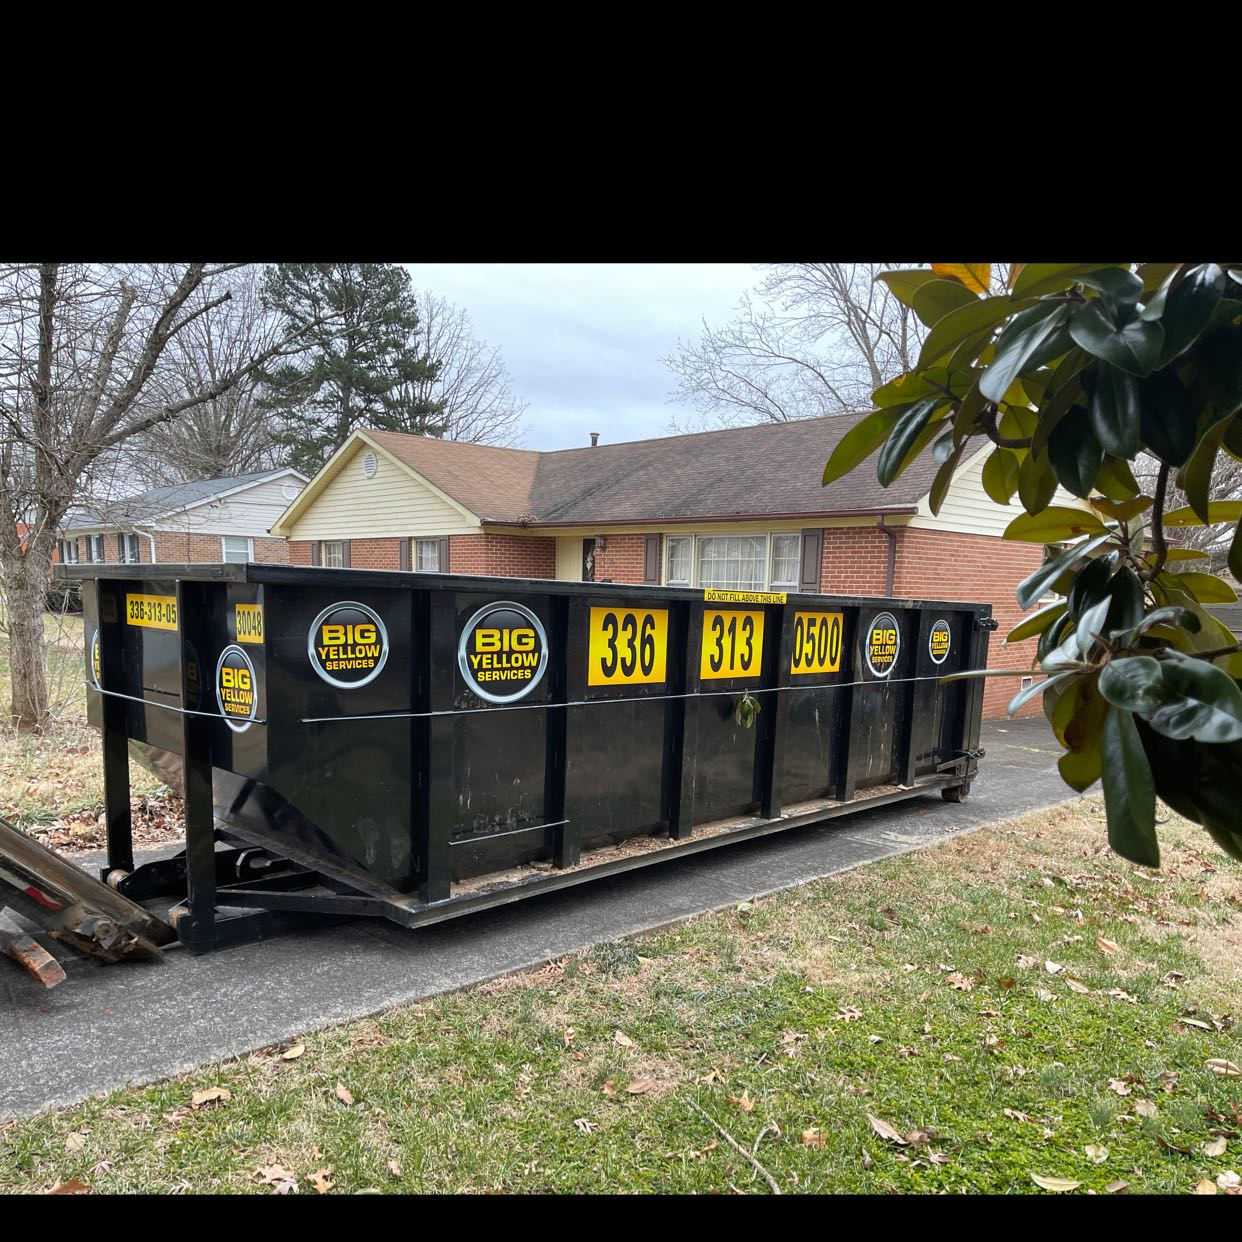 as93vdk13nbsigv7fmob Dumpster Rental Services in Elon, NC